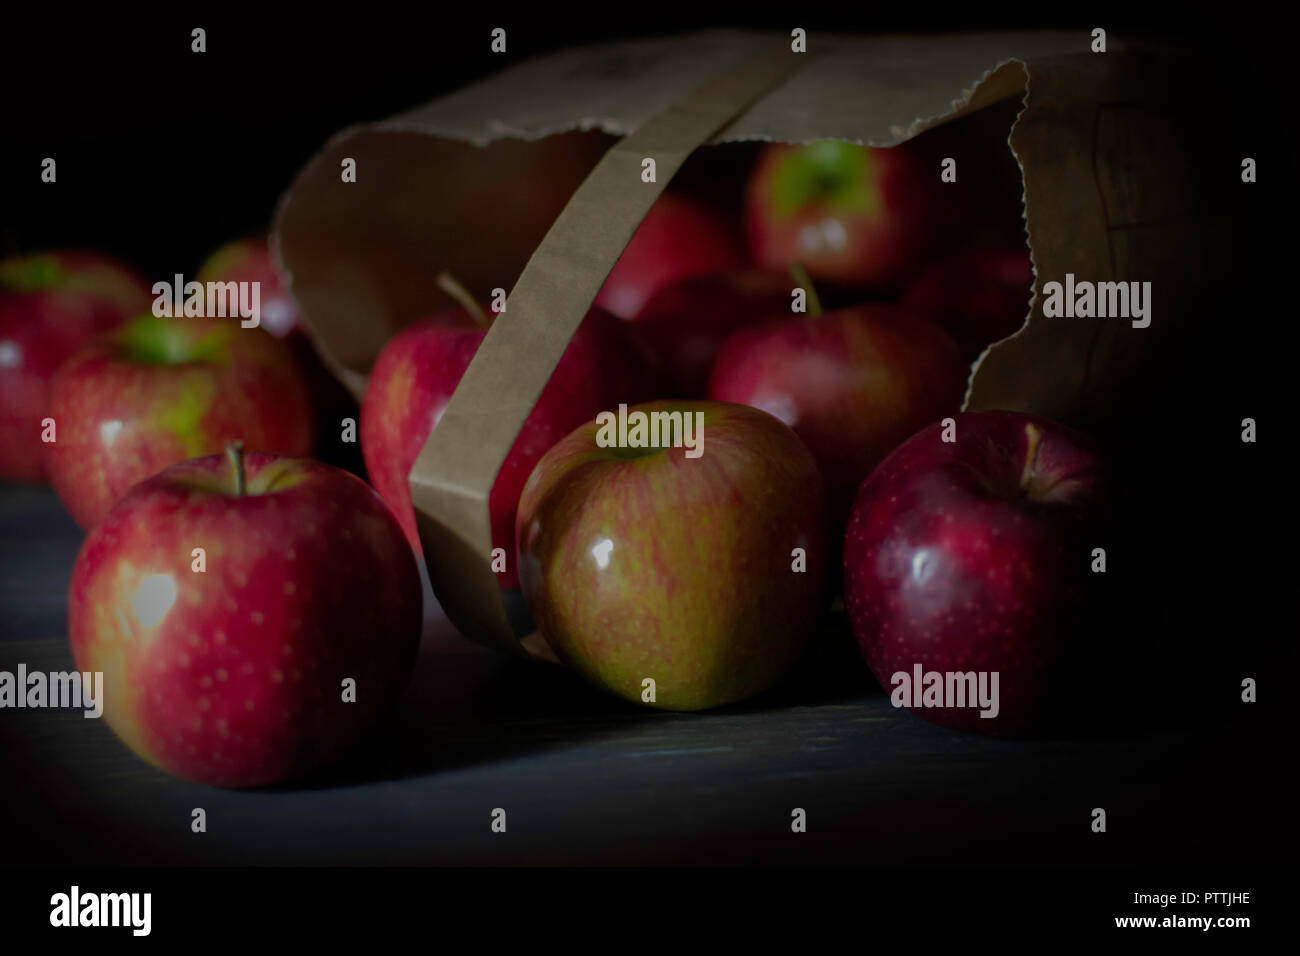 Bag of Jonagold apples Stock Photo